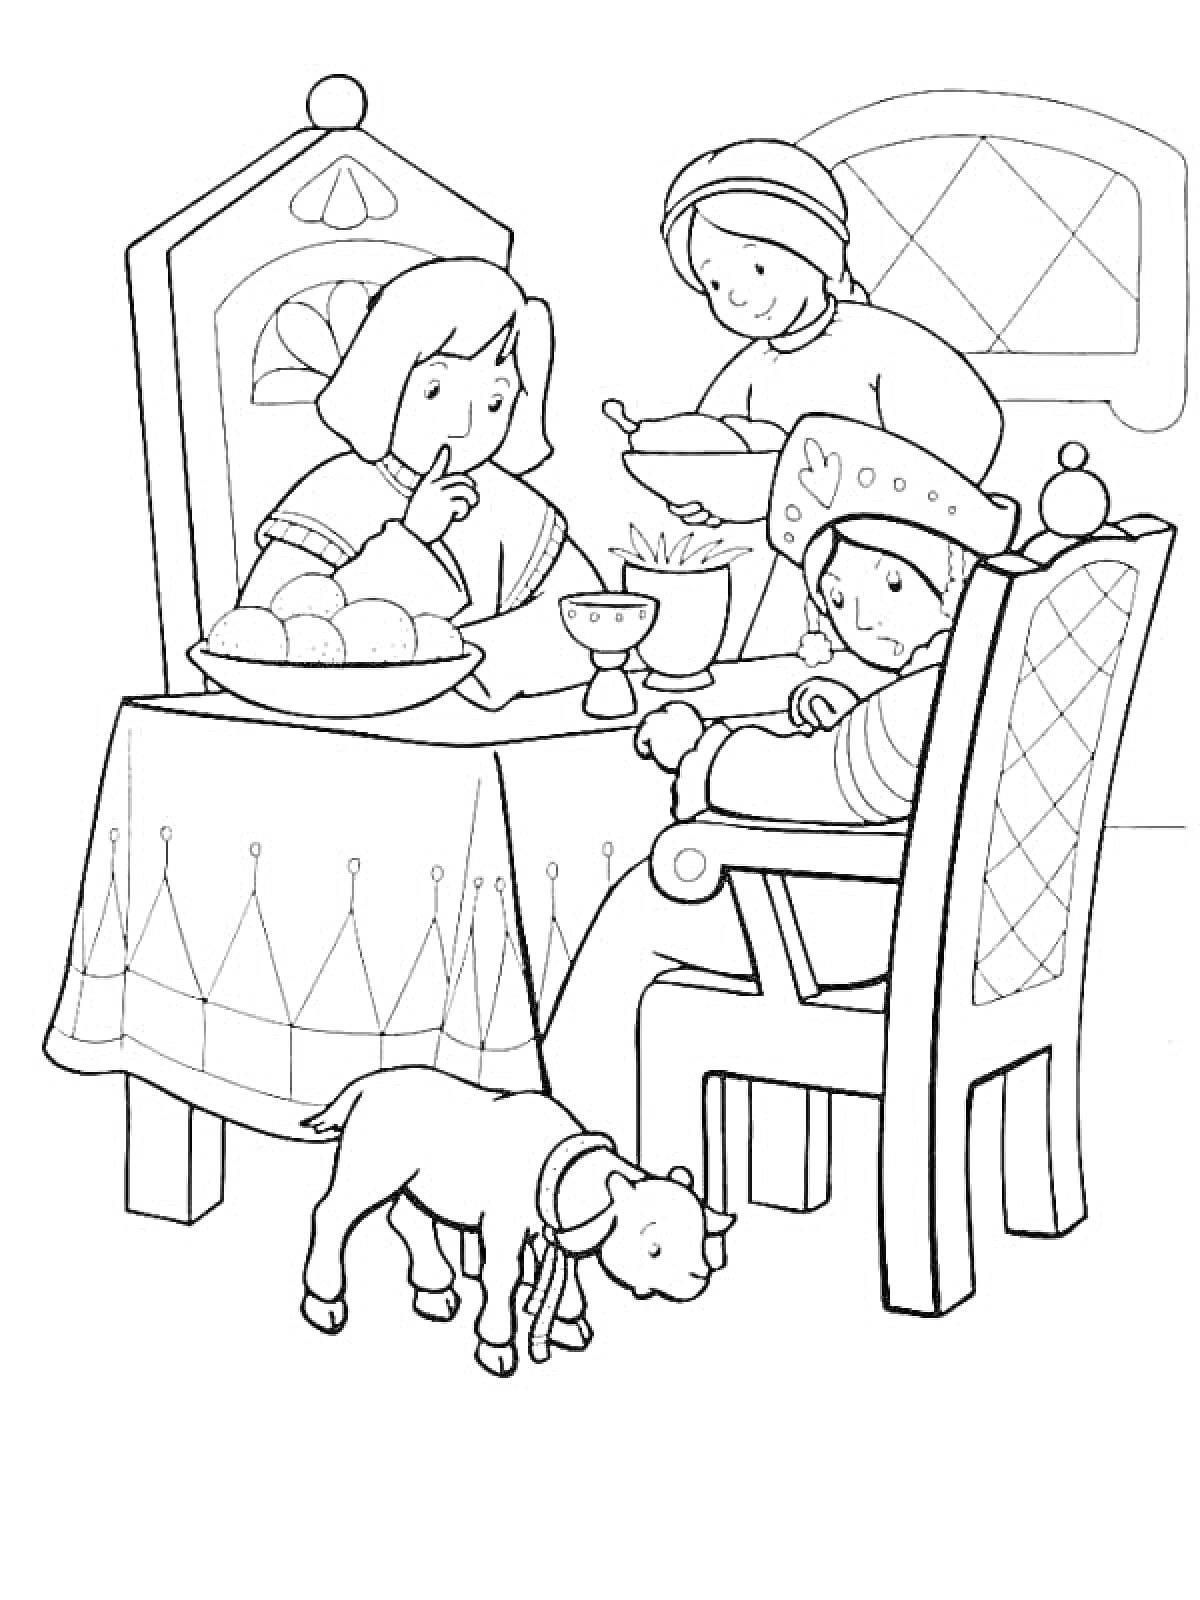 РаскраскаСестрица Аленушка и братец Иванушка за столом, женщина подаёт им еду, на столе тарелка с буханками, козлёнок под столом